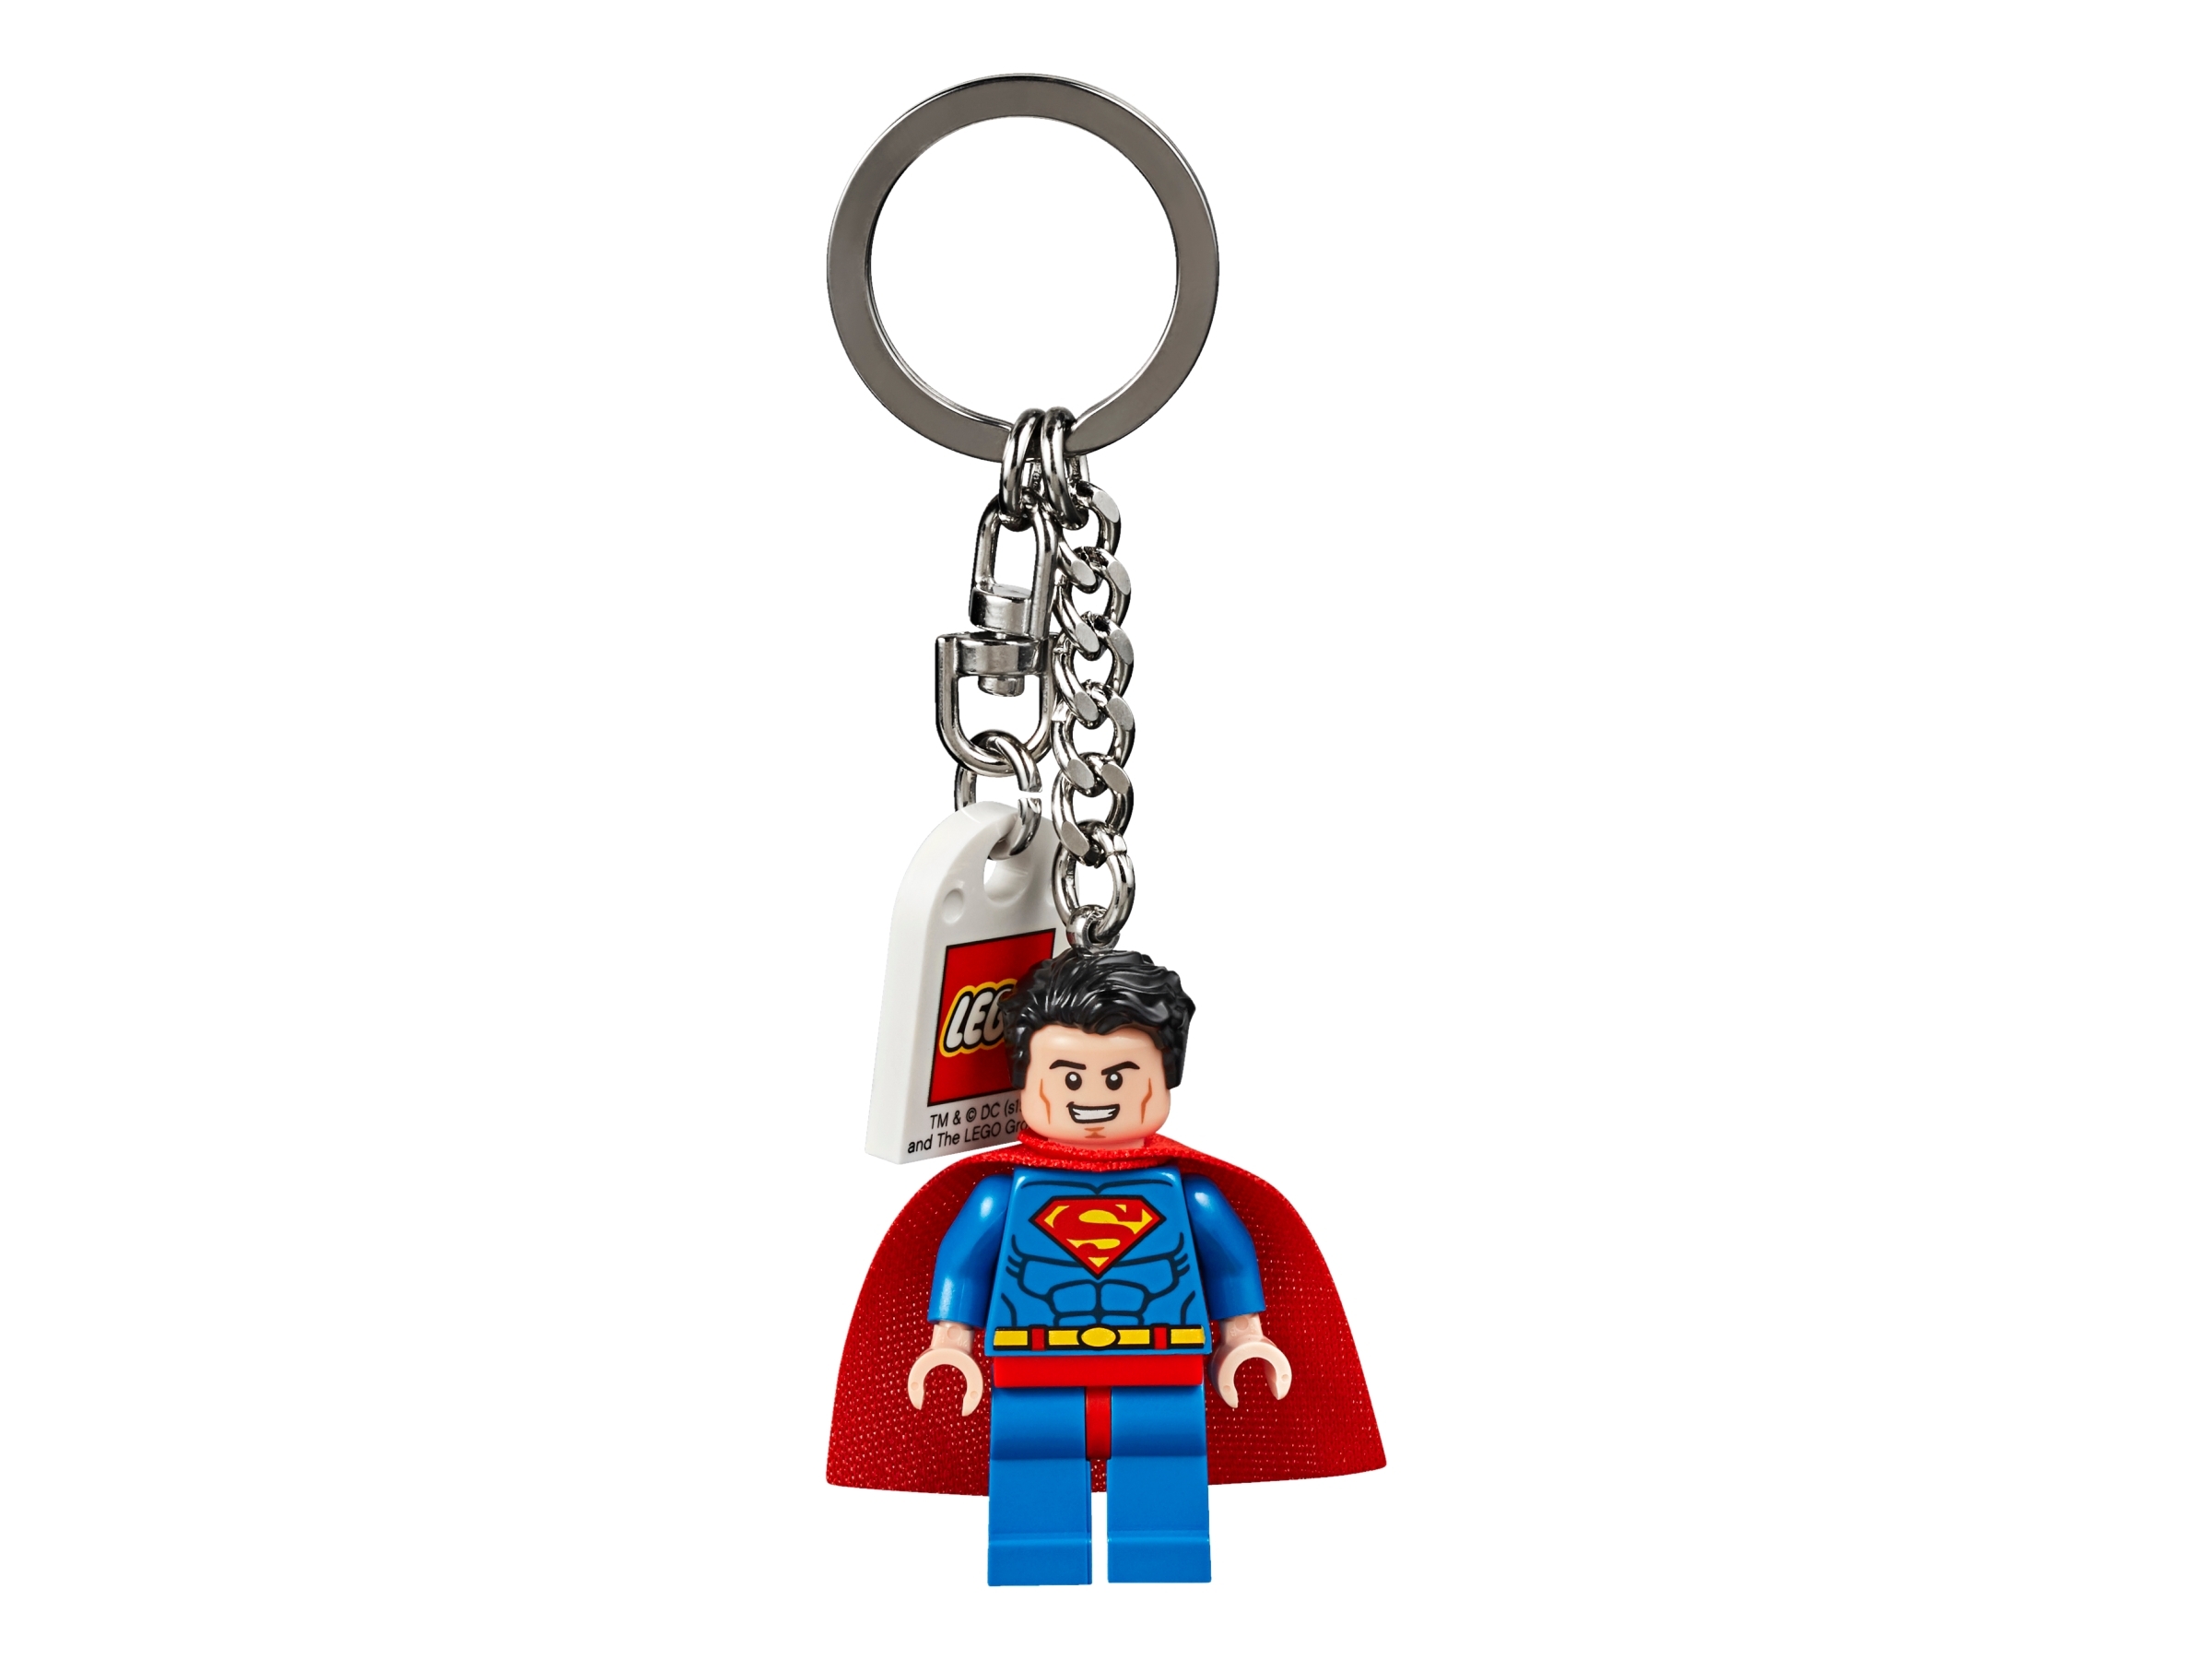 Lego 853772 Super Heroes DC Comics Cyborg Key Chain